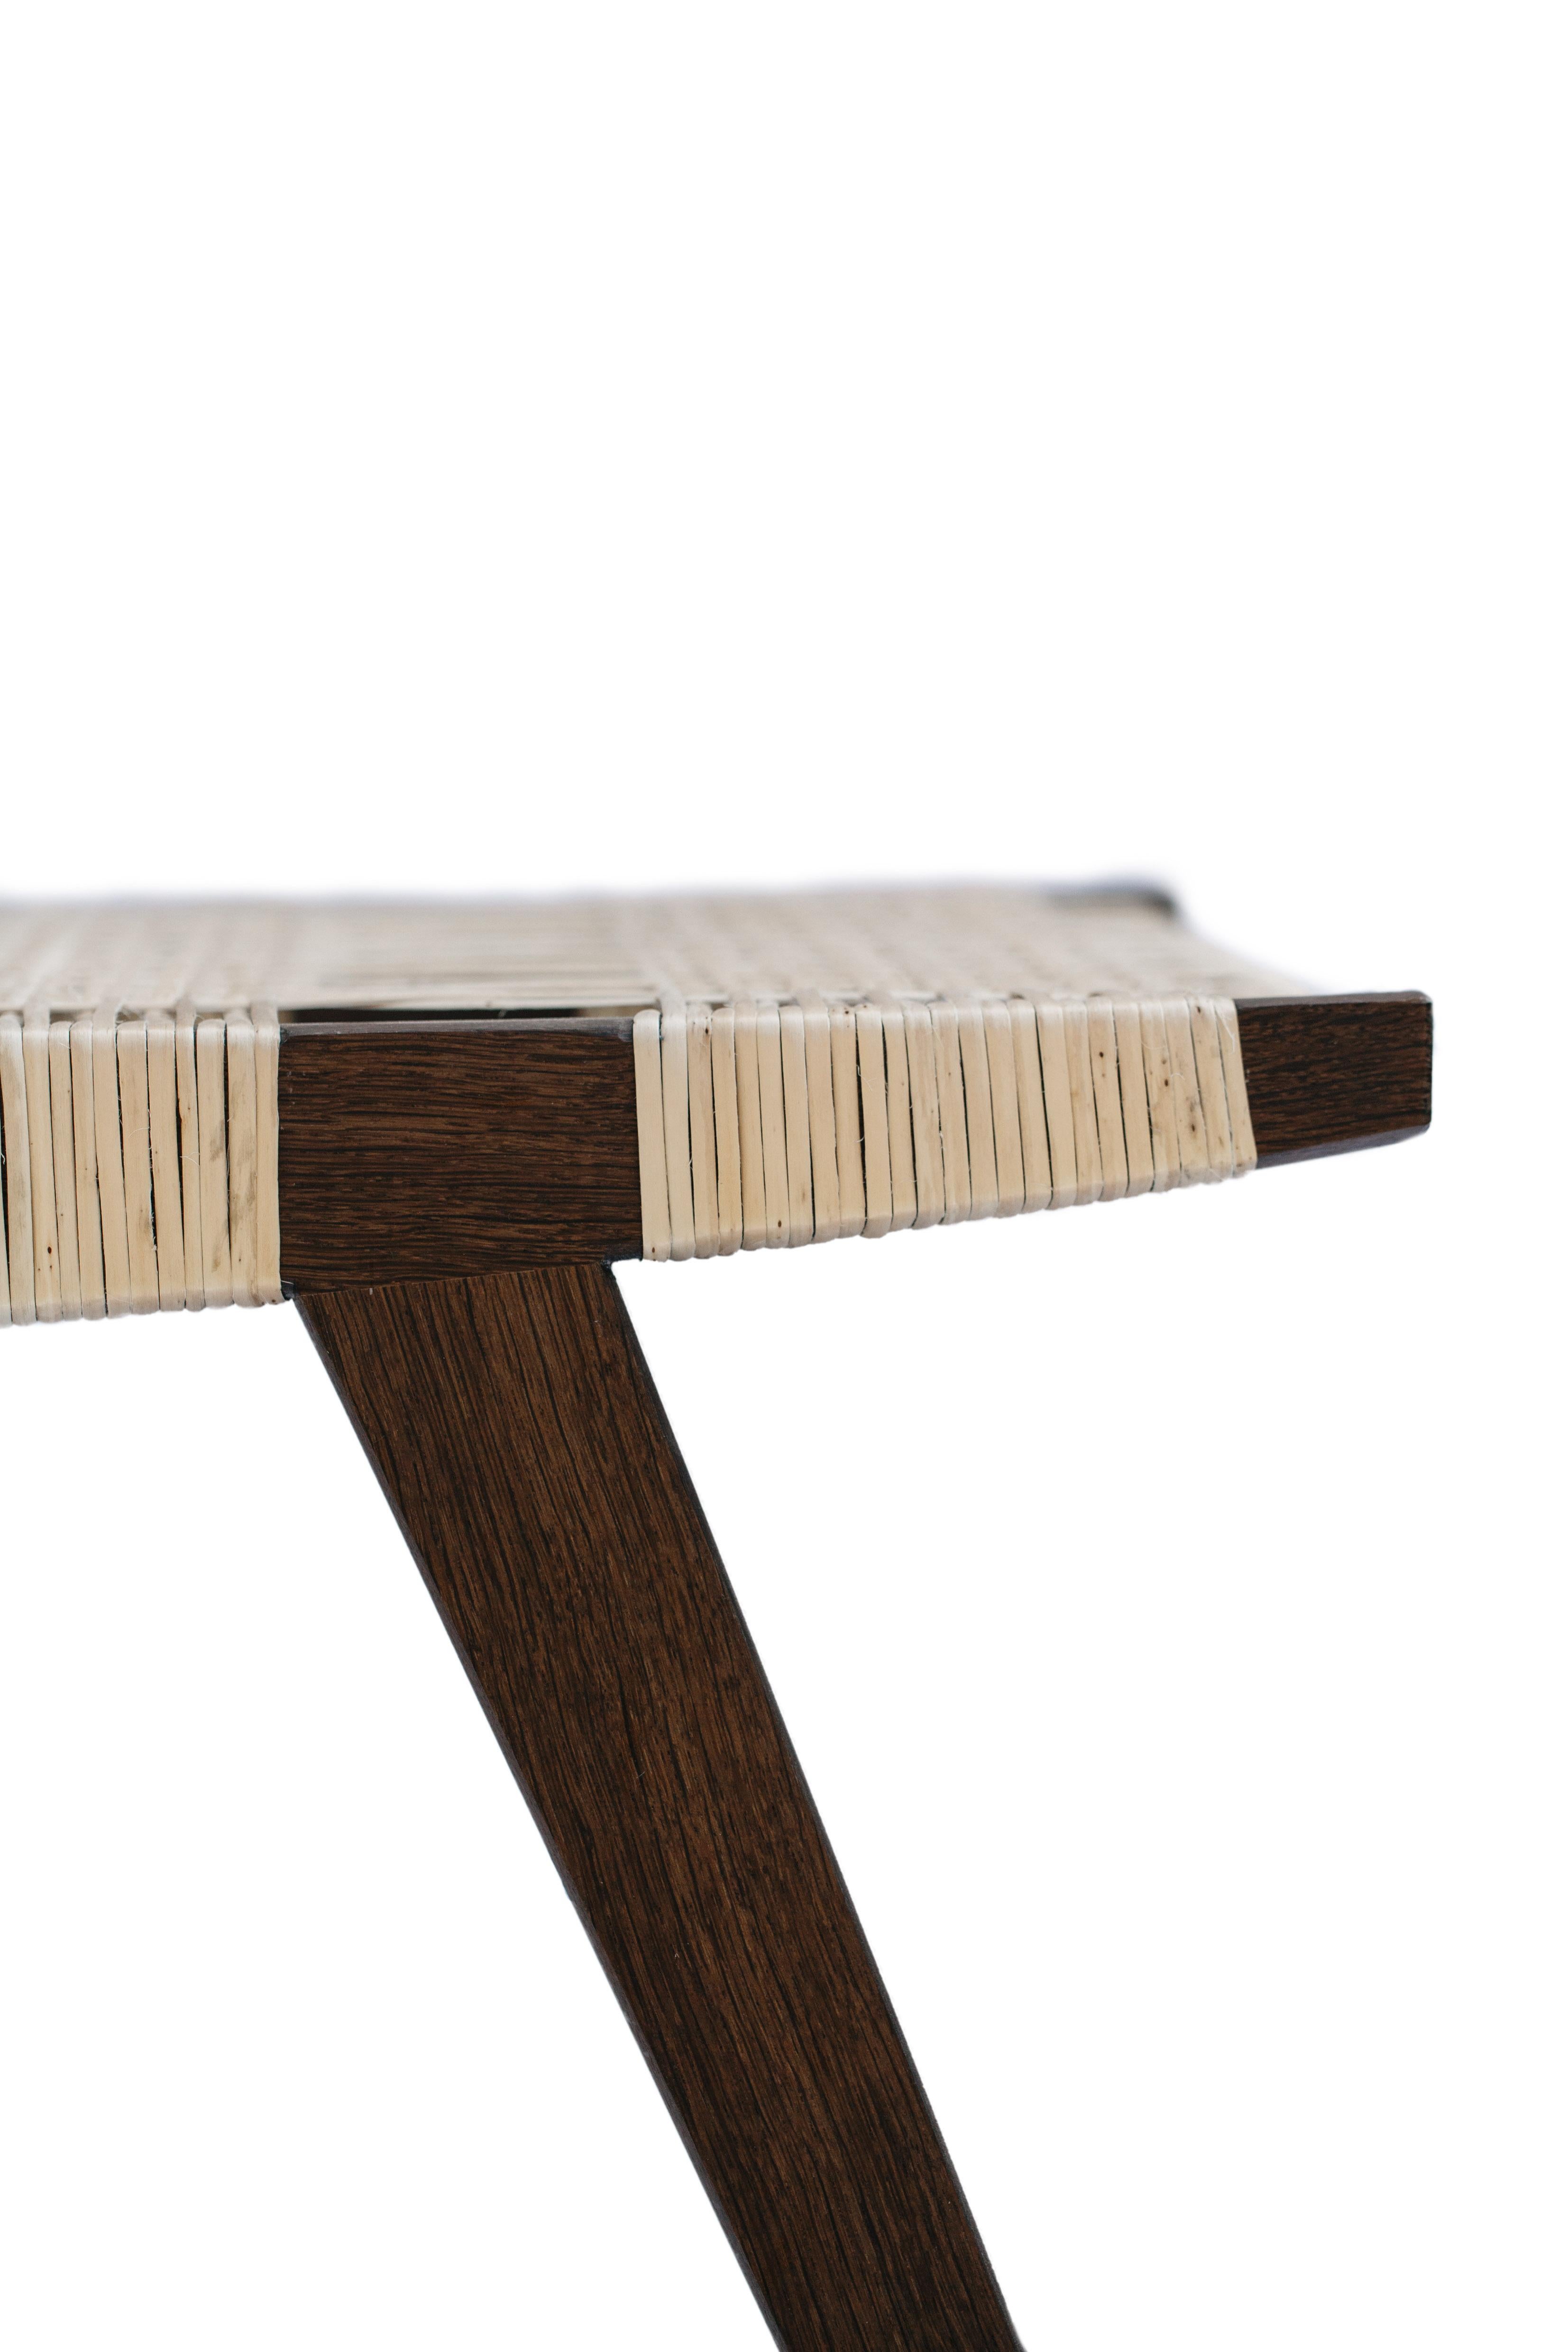 British Contemporary pi2 Stool, Fumed Oak Frame, Split Willow Skein Seat For Sale